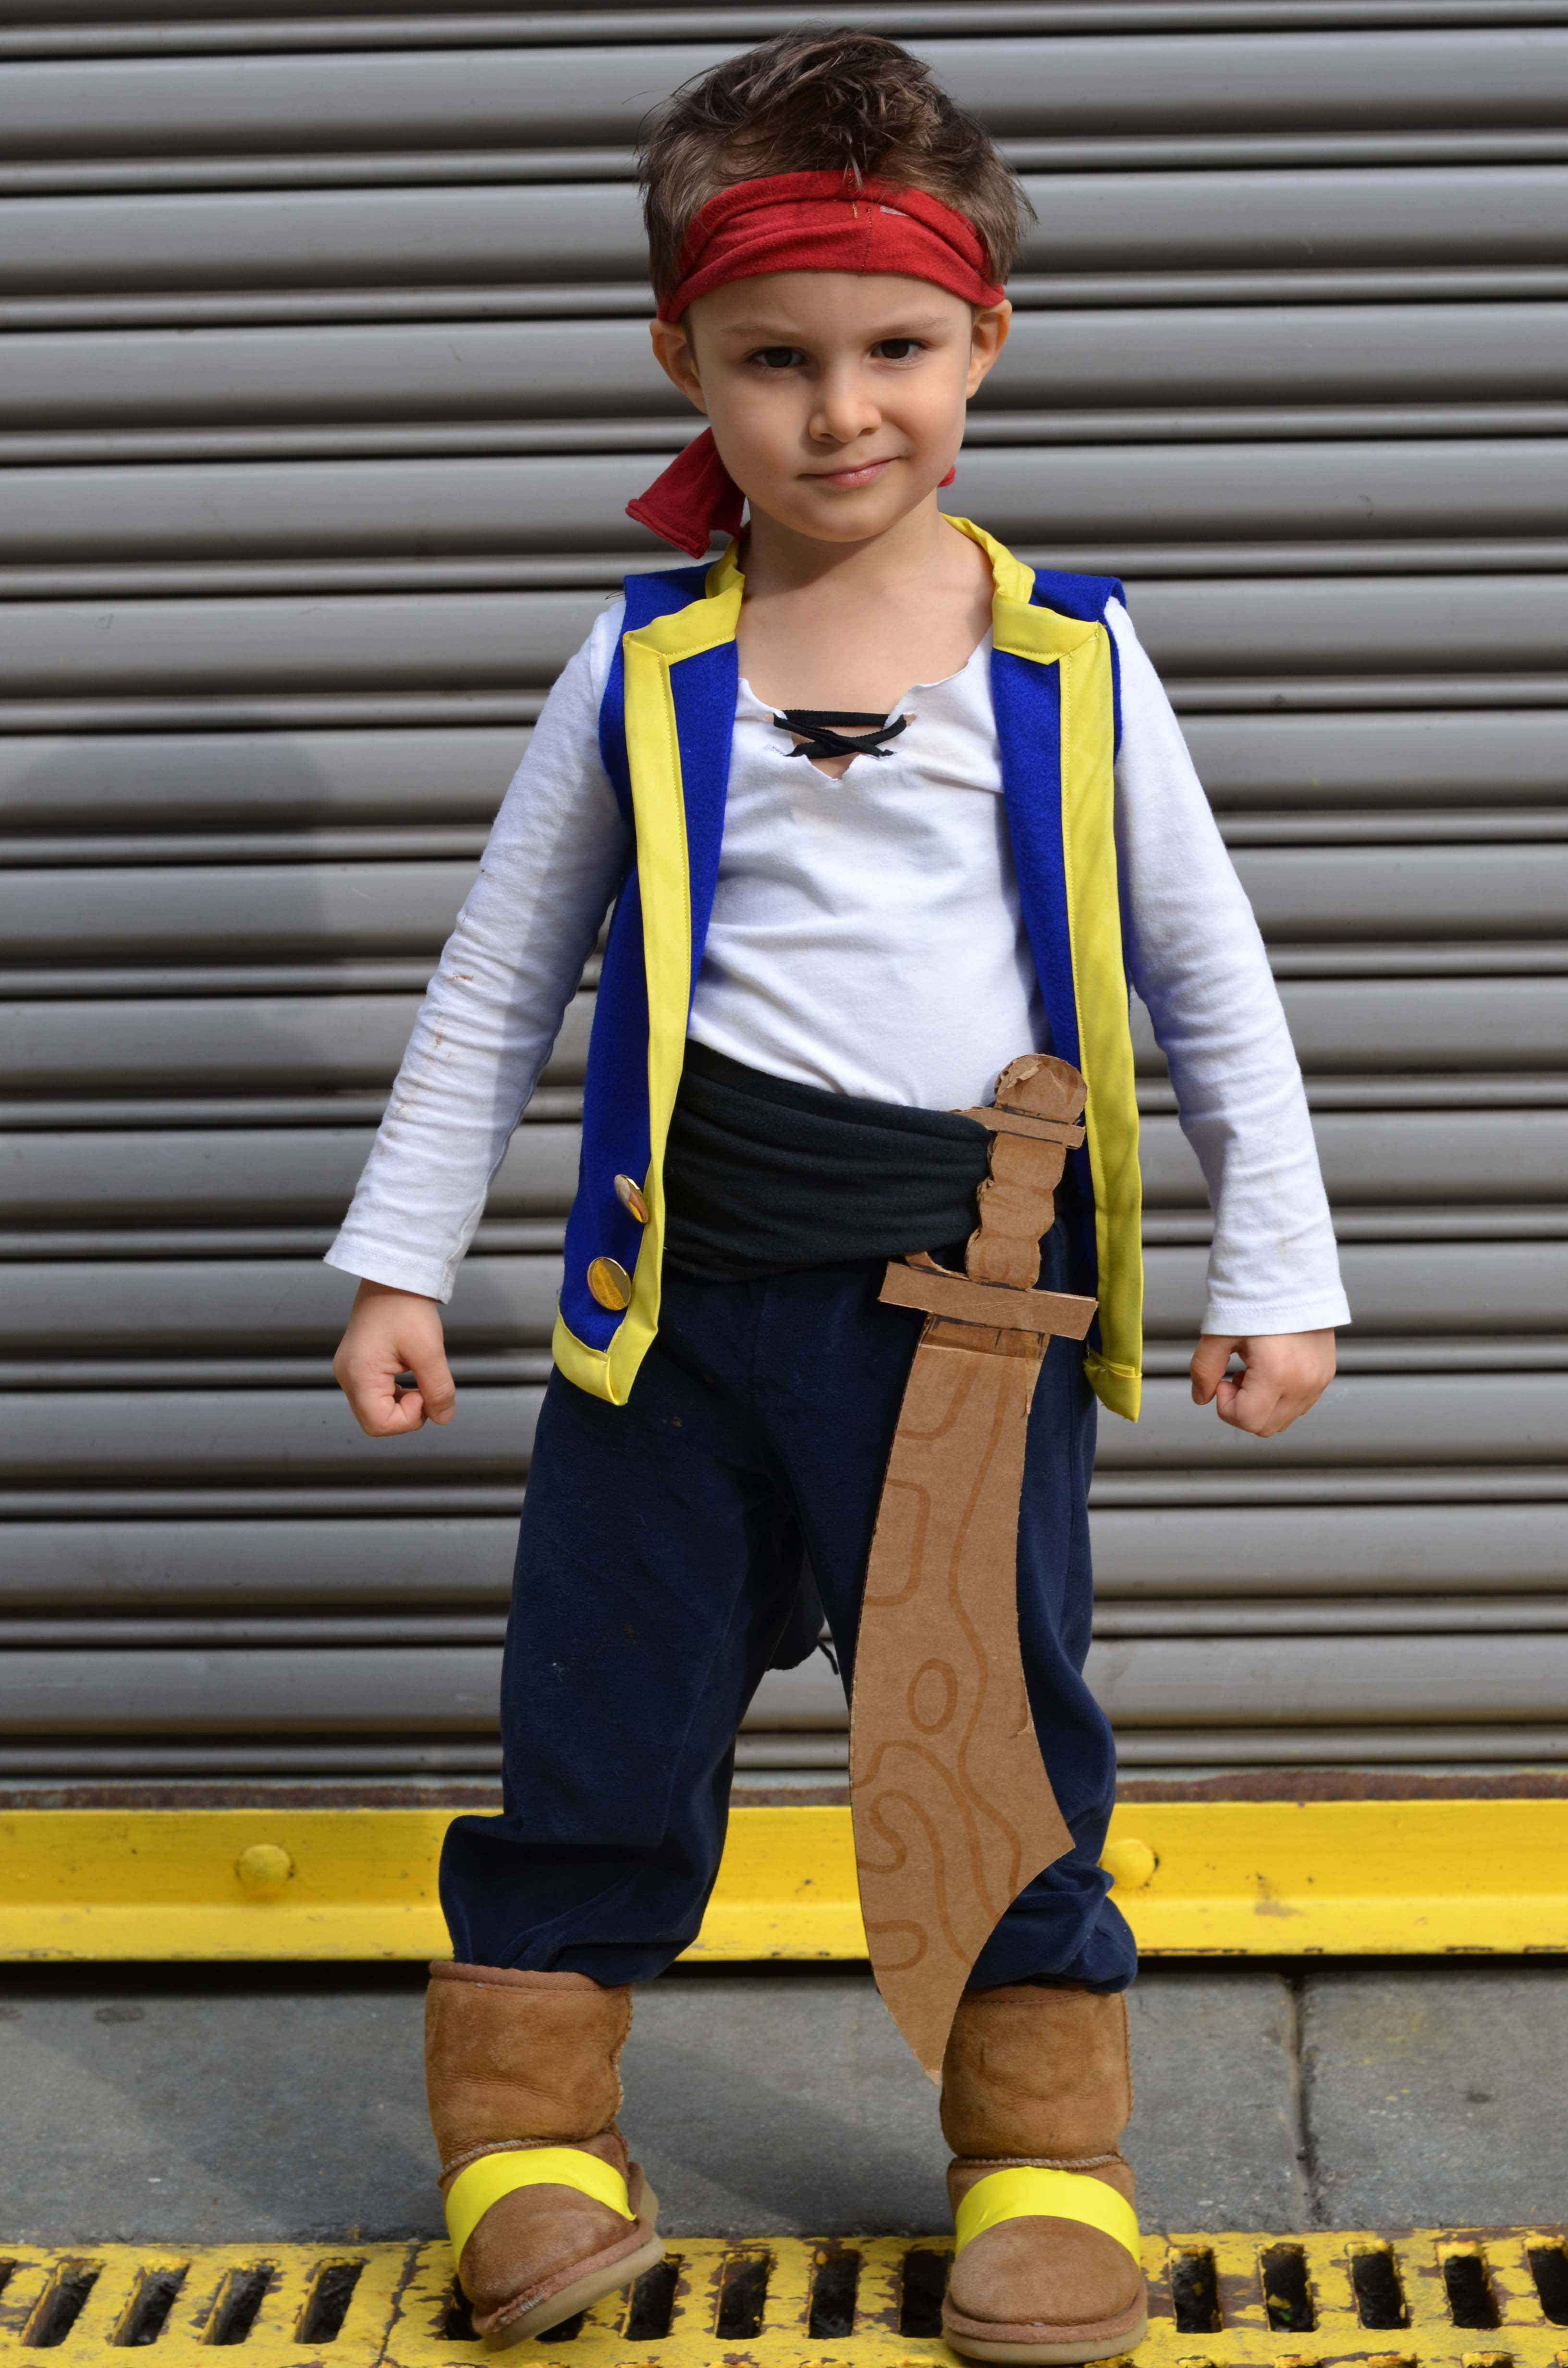 Toddler Pirate Costume DIY
 DIY Halloween Costumes for Kids